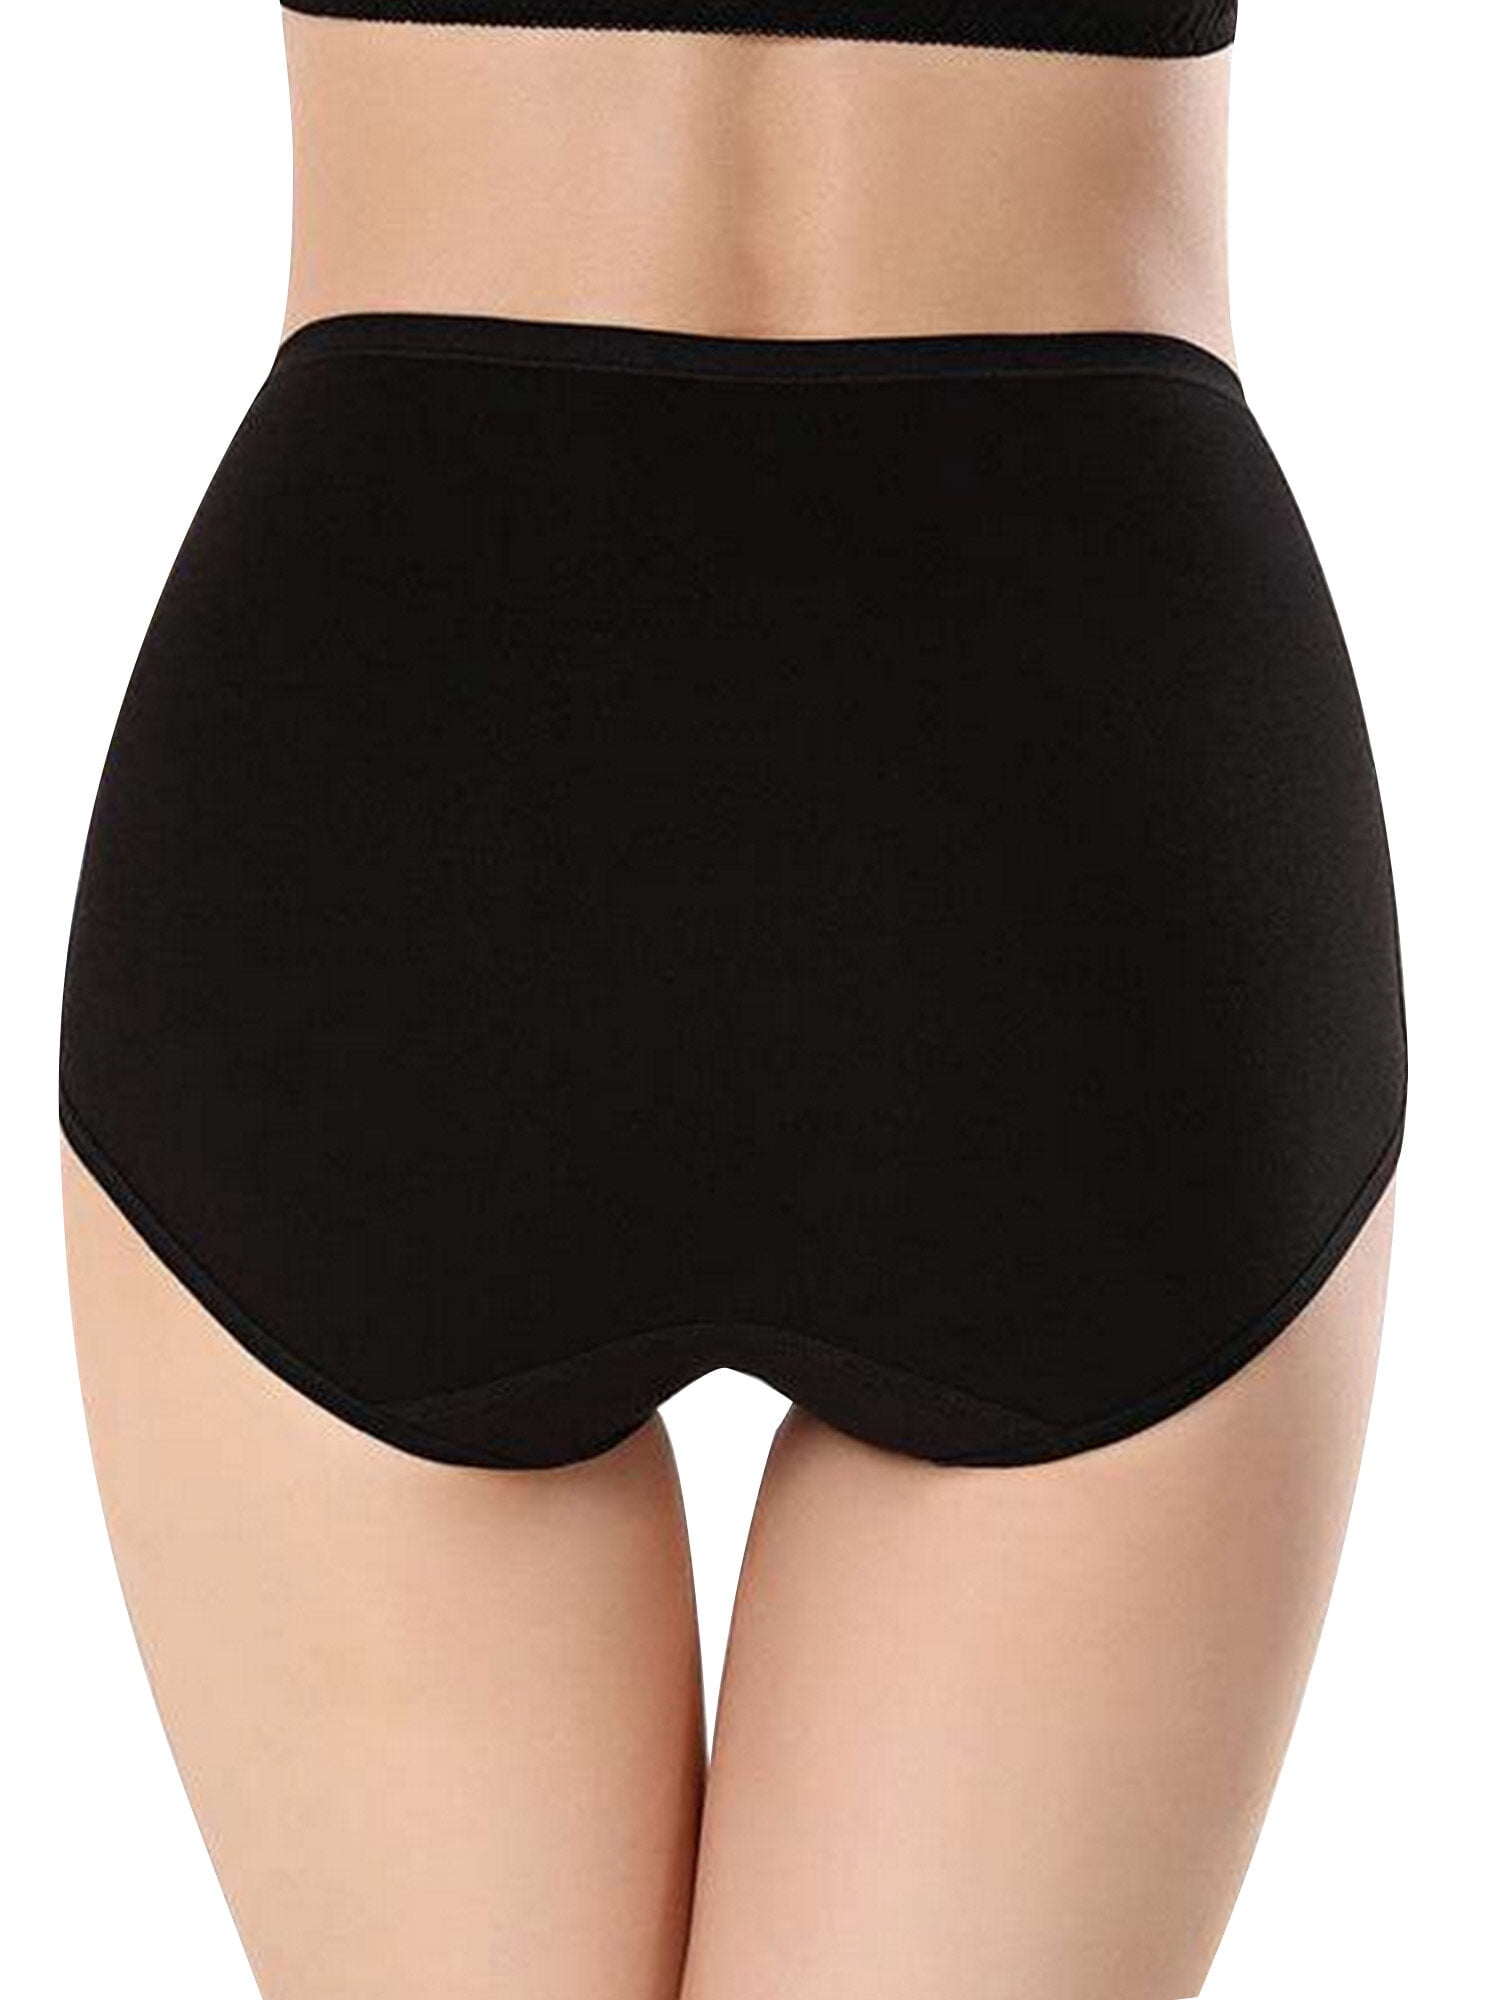 Aveki Women's High Waisted Cotton Underwear Ladies Soft Full Briefs Panties  Pack Of 4, Black+black+grey+grey, 3xl